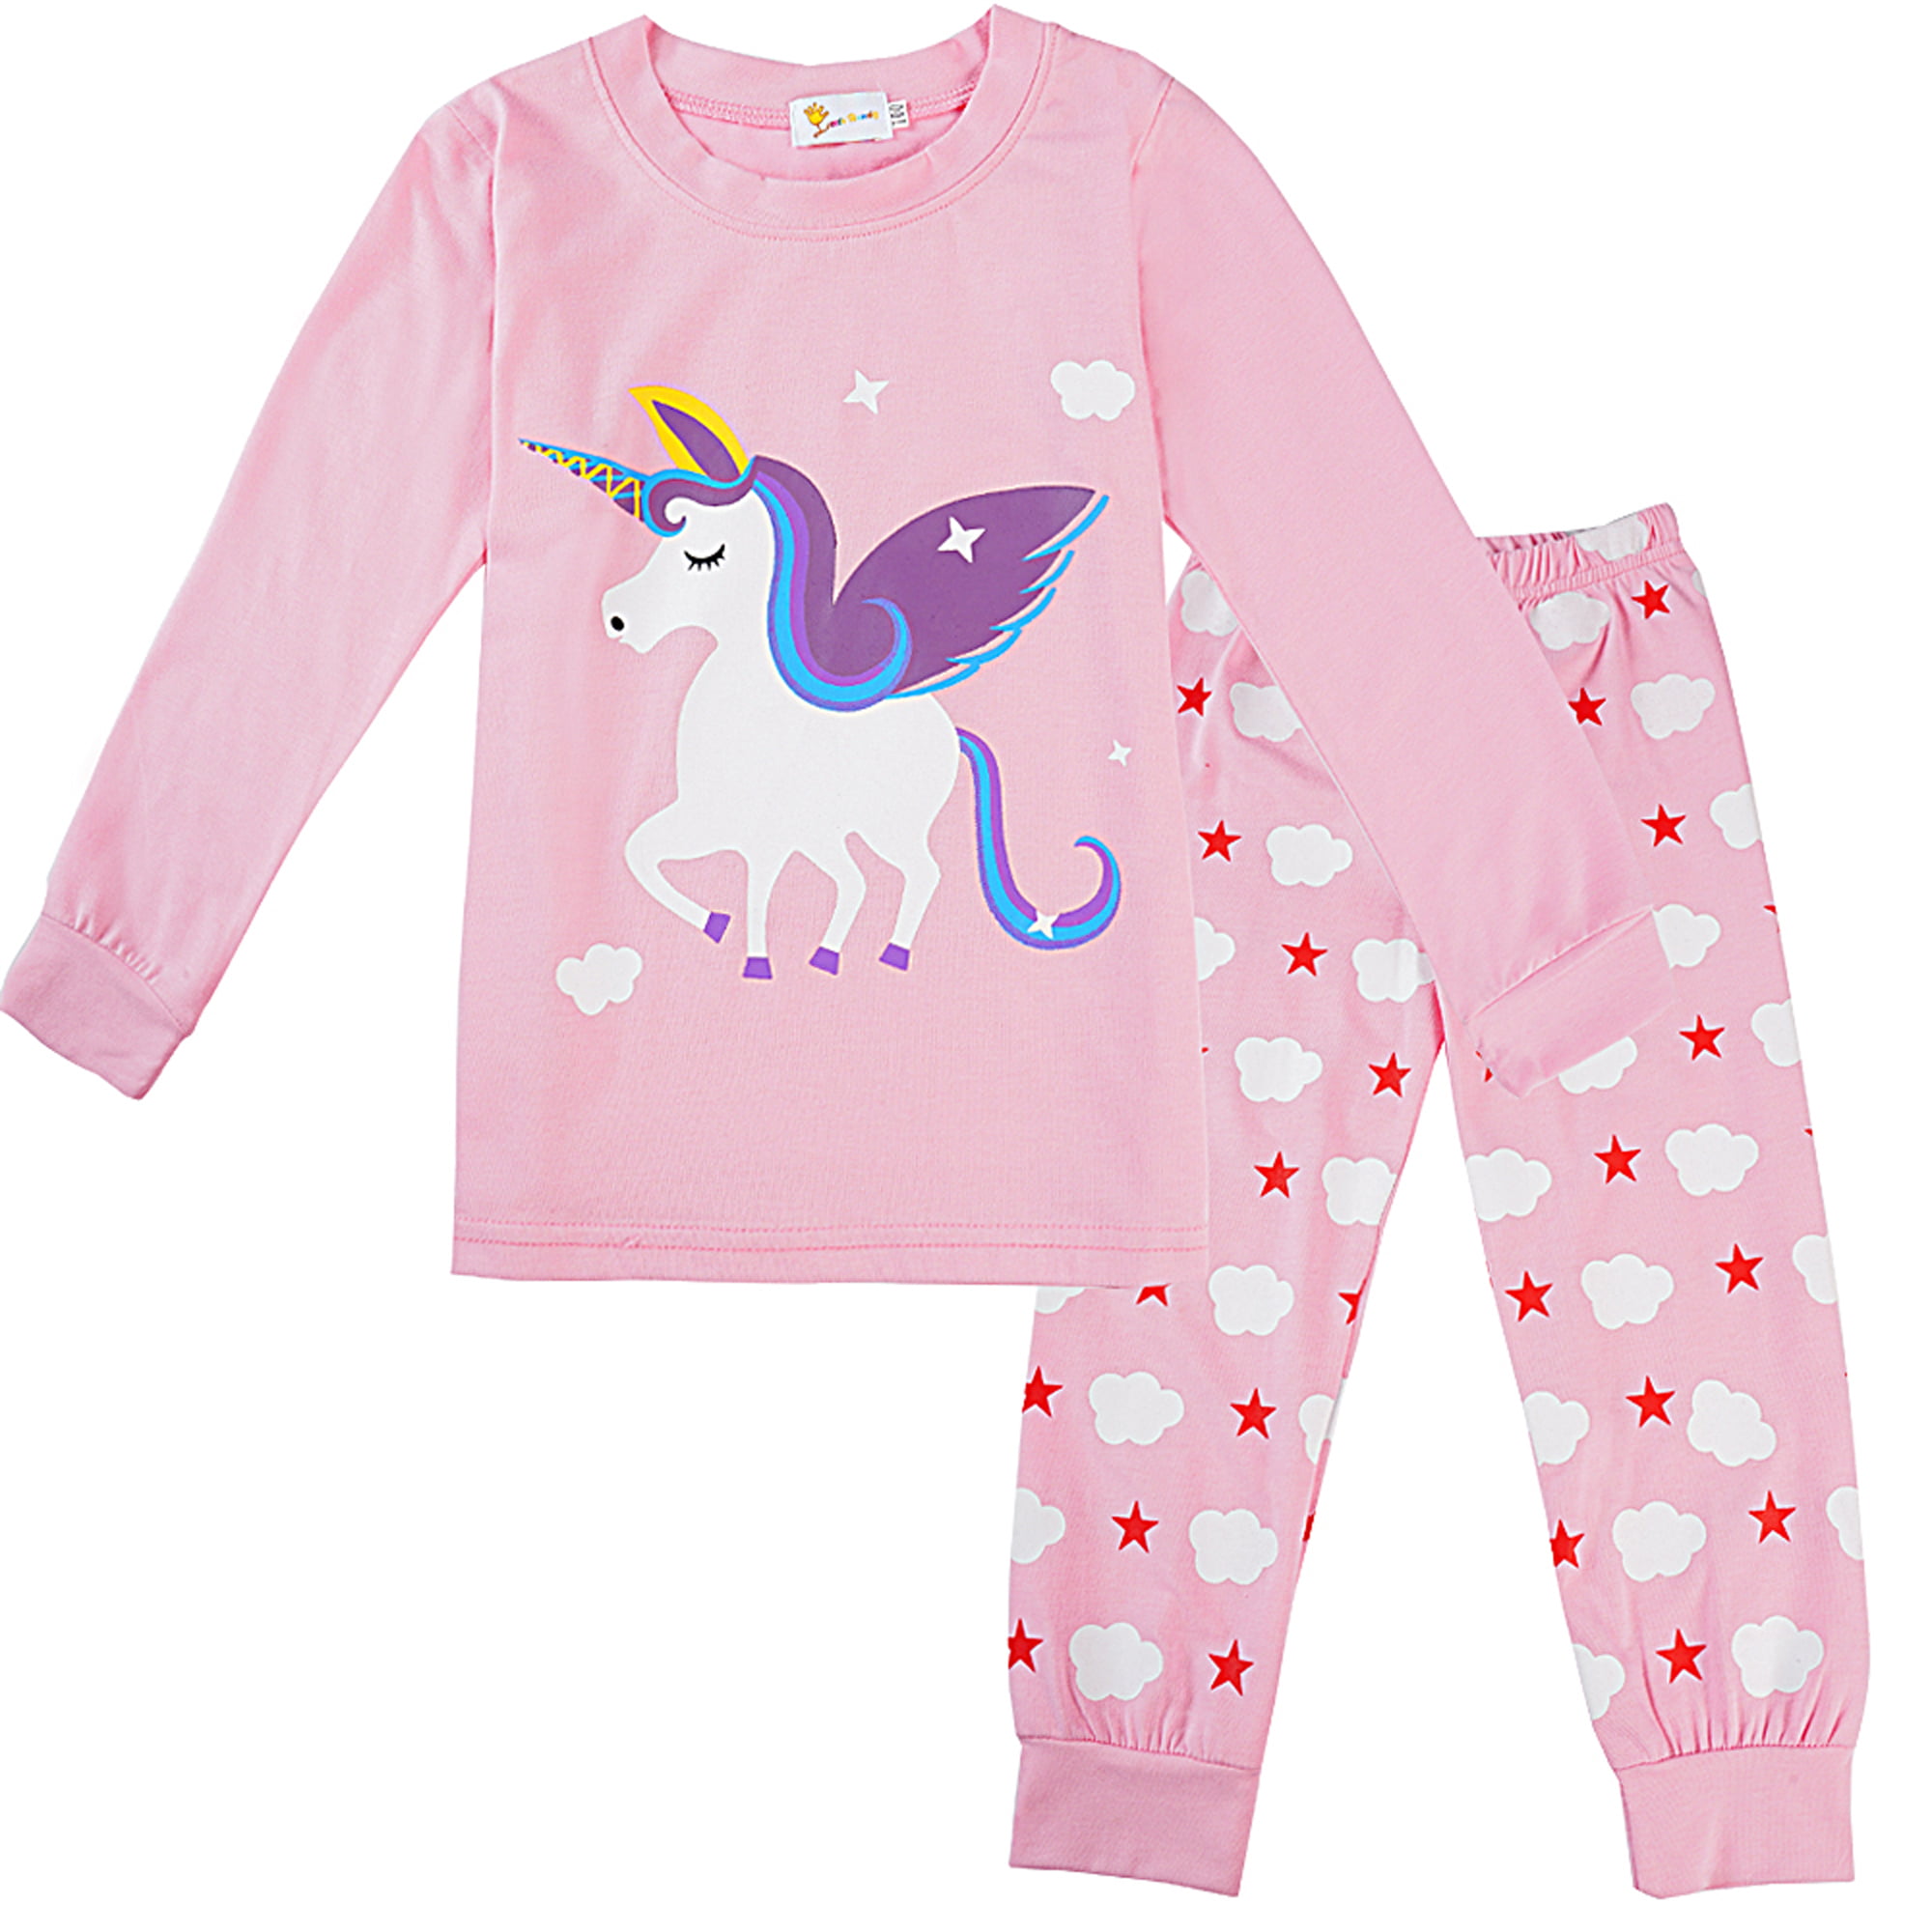 Little Hand - Little hand Girls Pajamas Sets Toddler Christmas PJS 100% ...